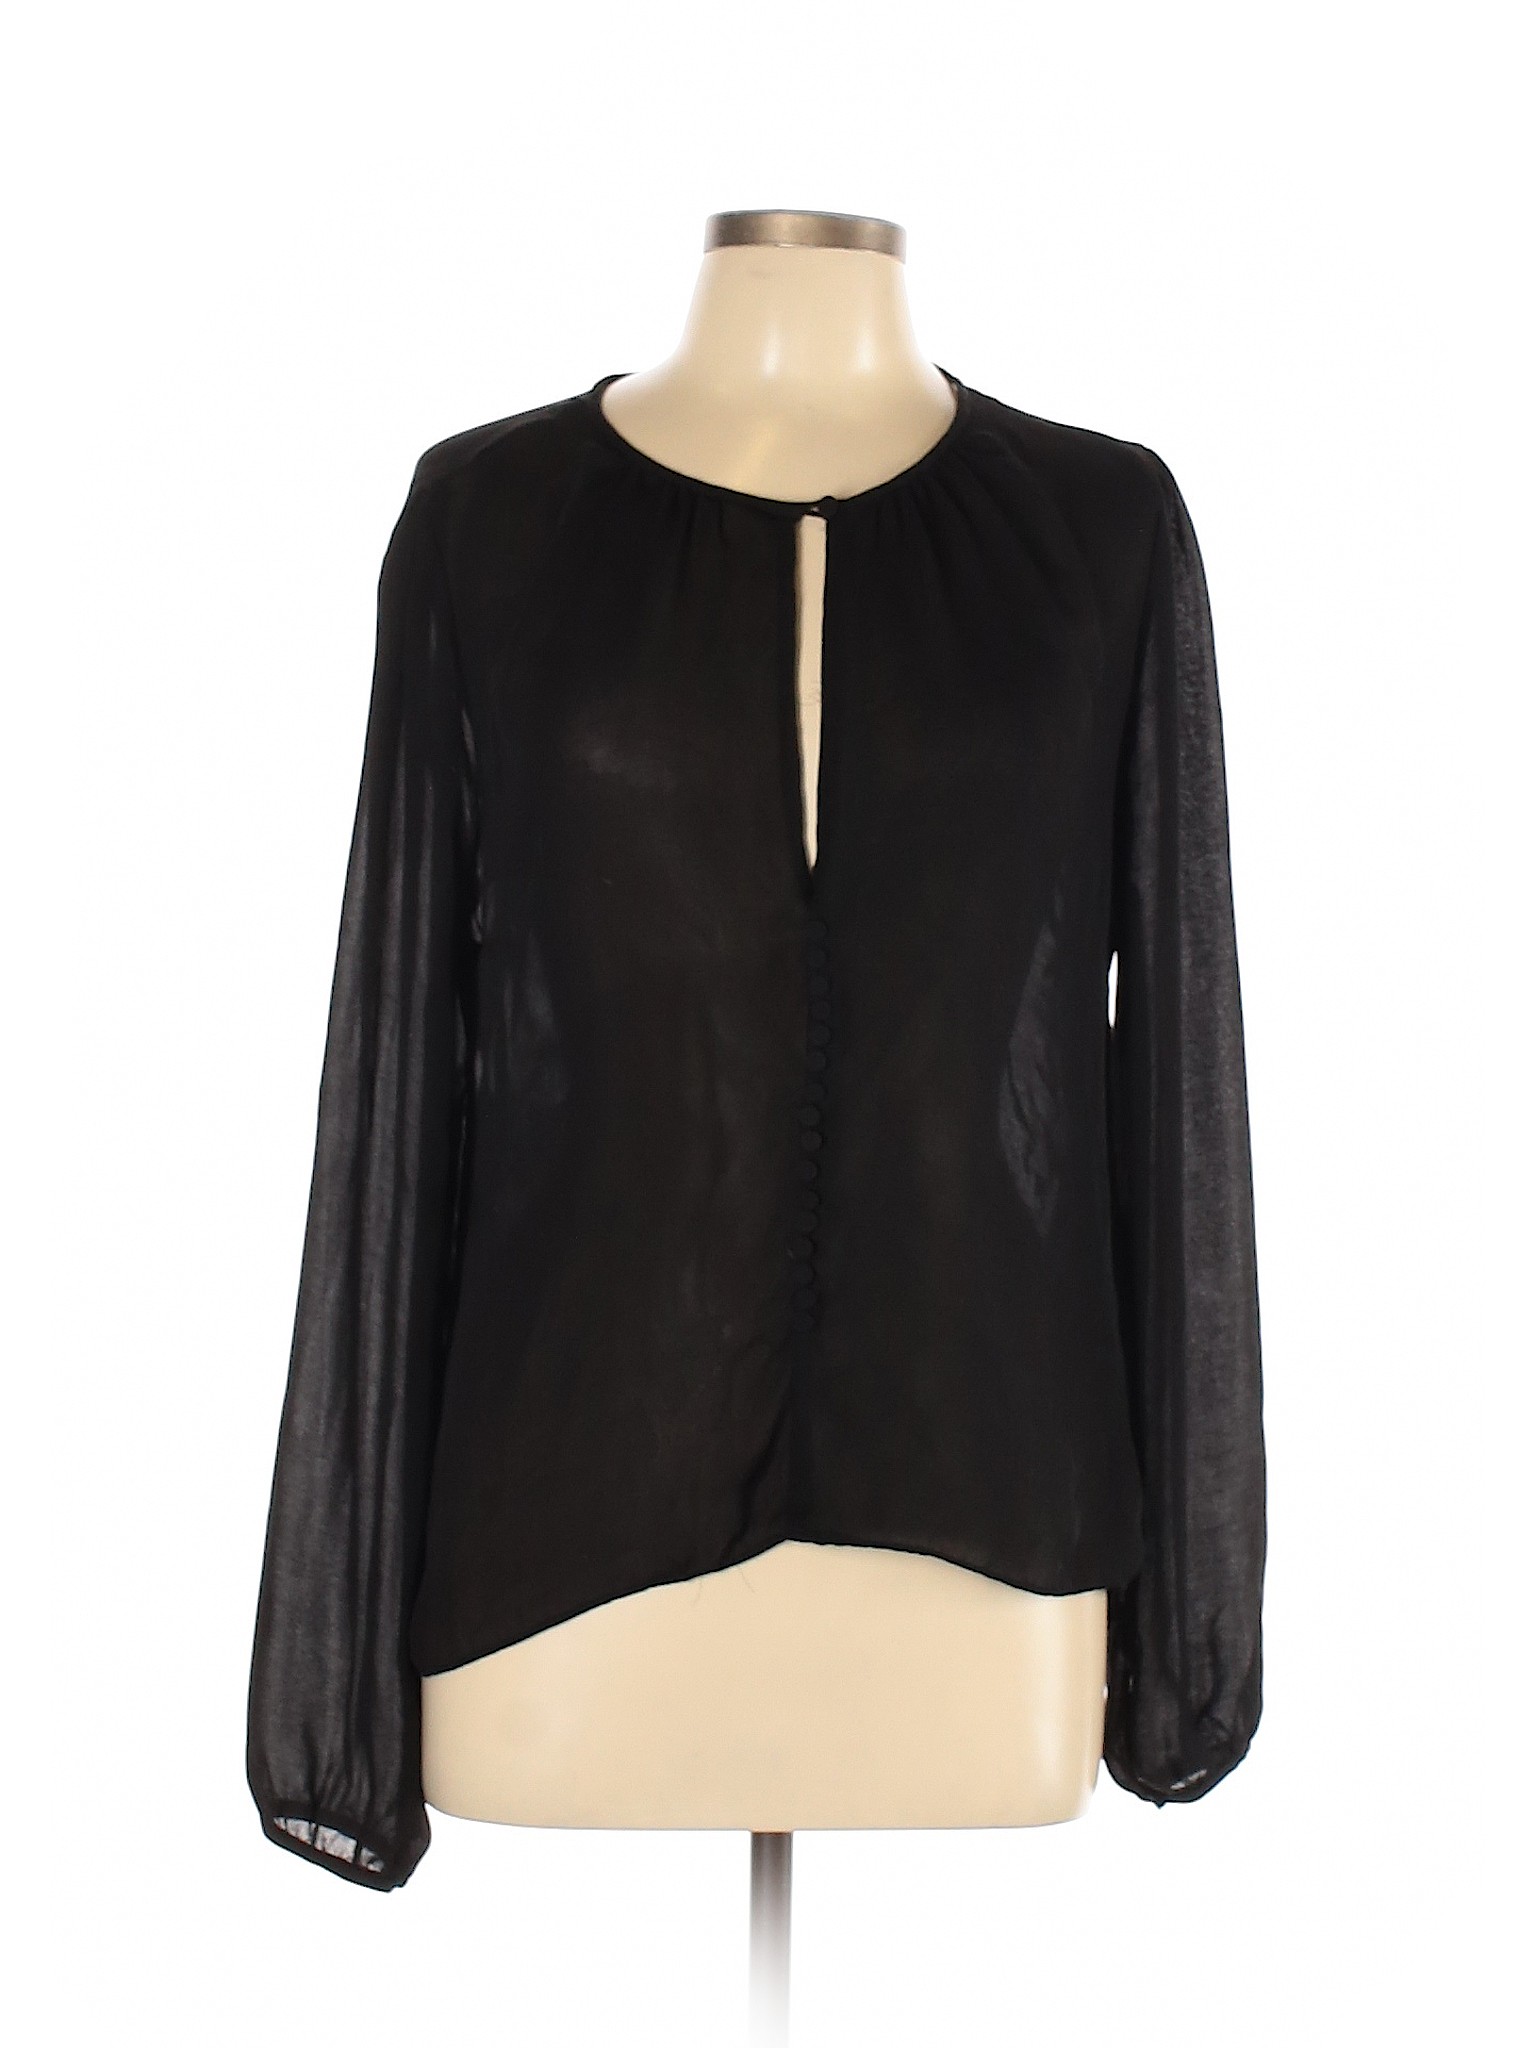 Philosophy Republic Clothing Women Black Long Sleeve Blouse L | eBay